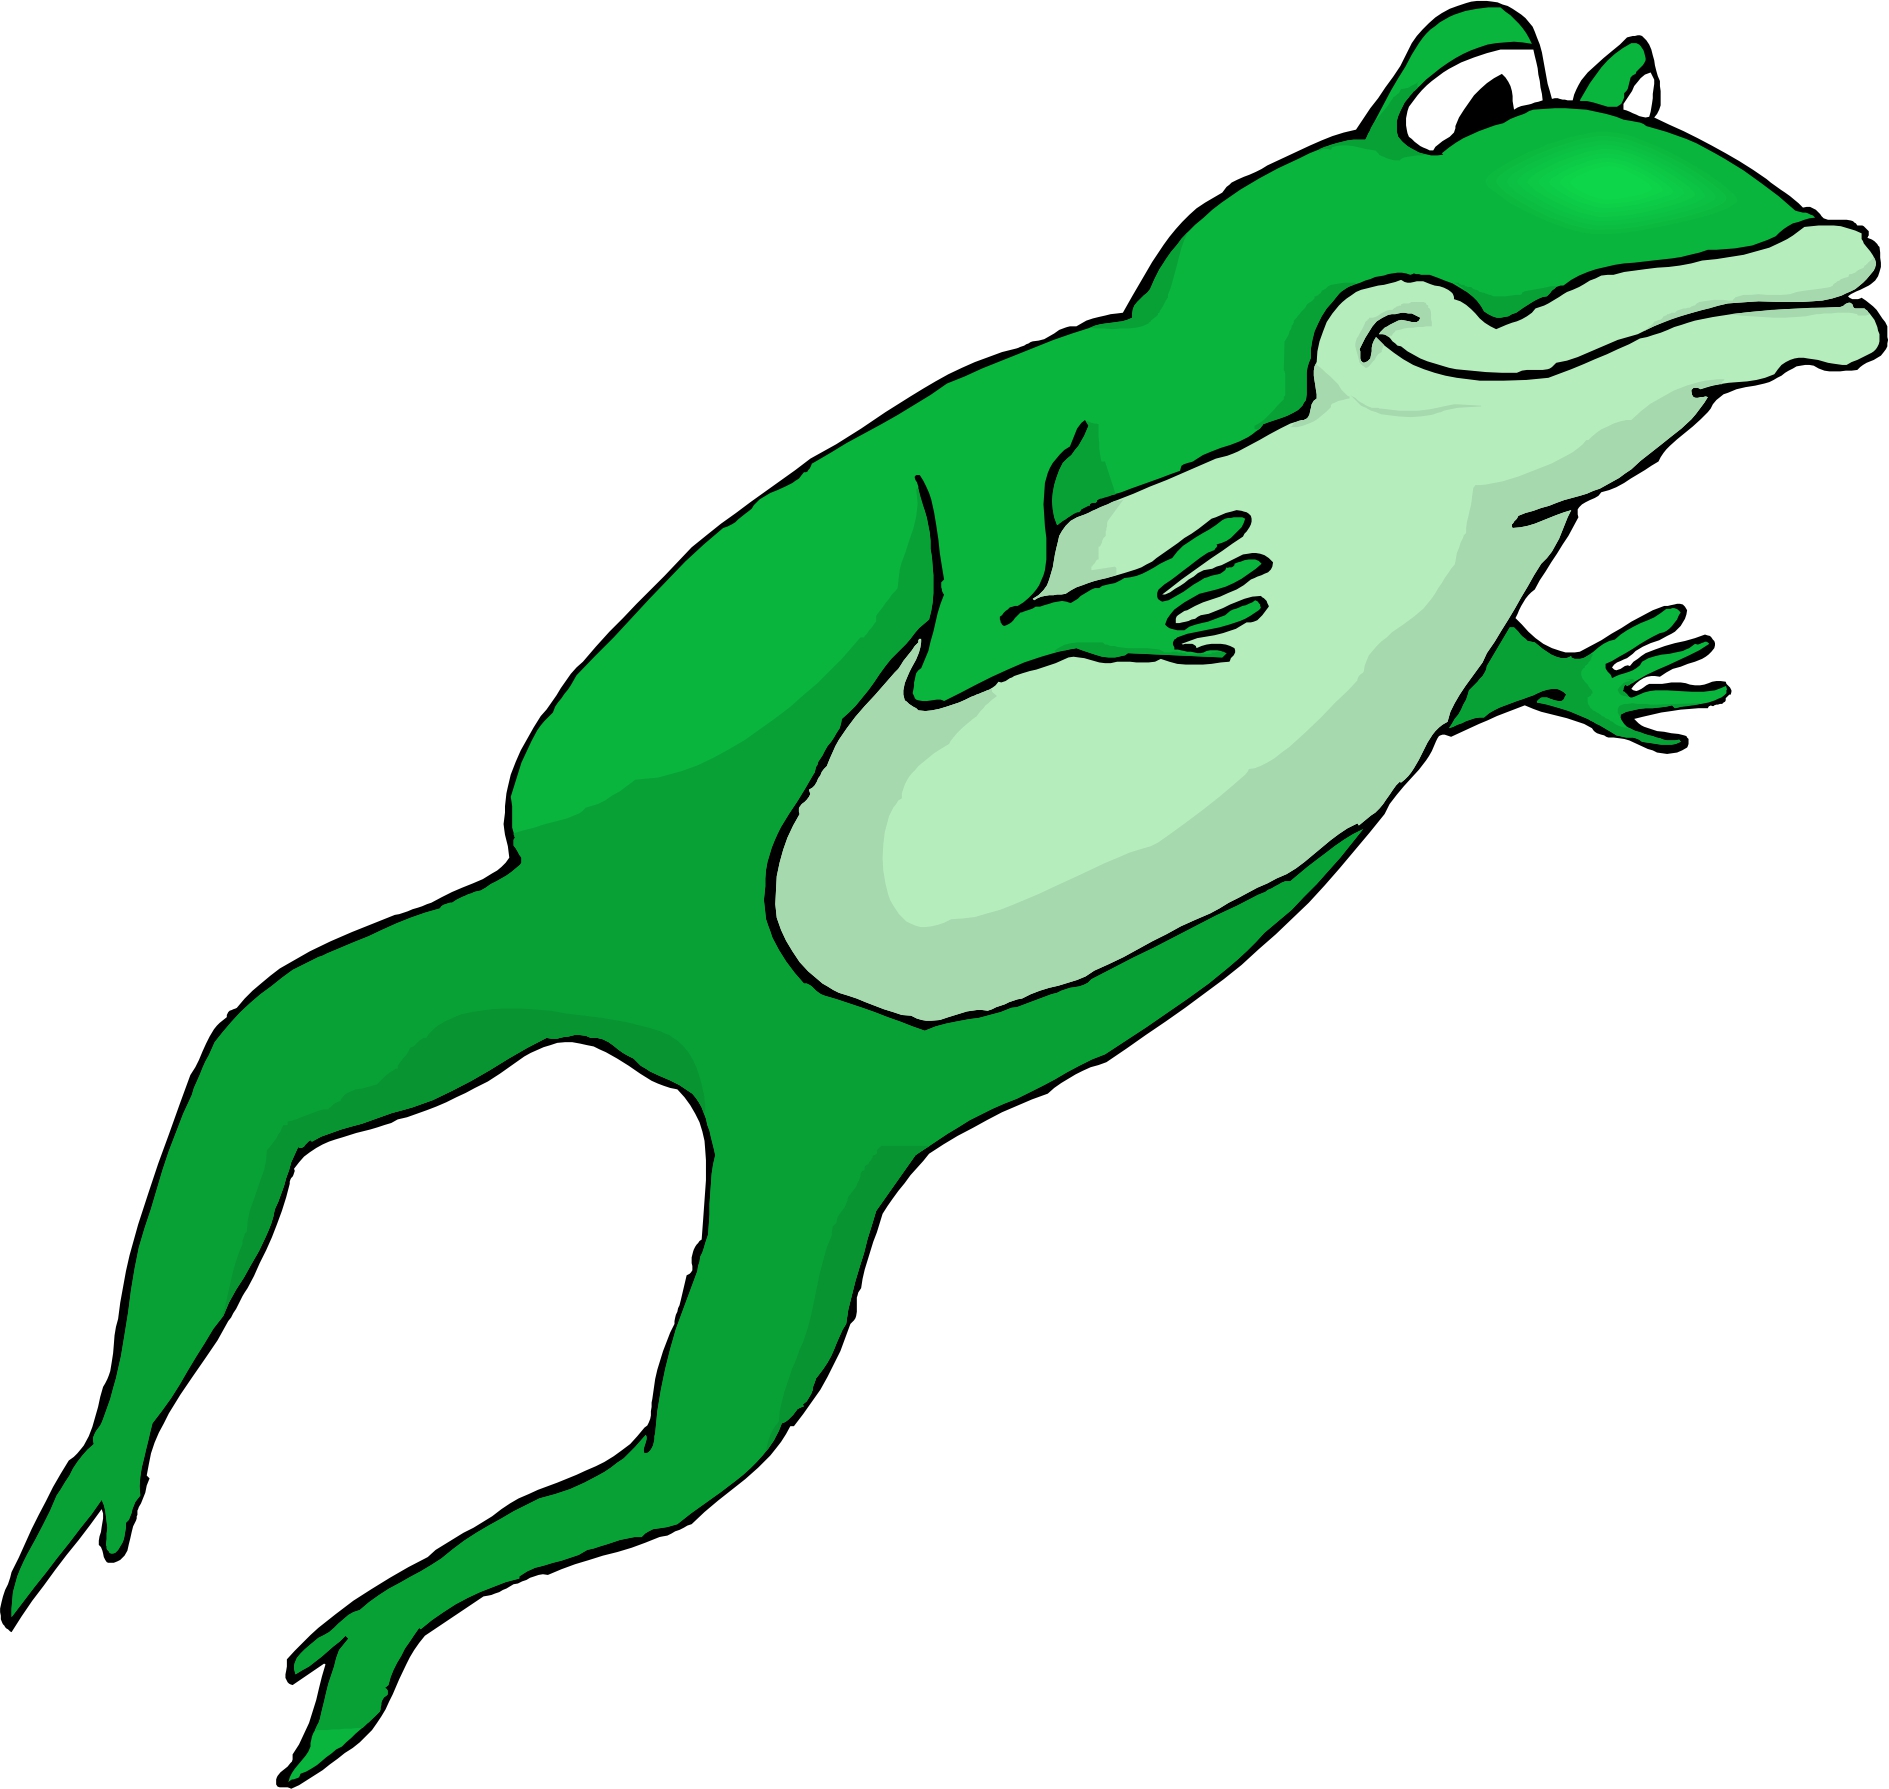 Description: Leaping Frog Cli